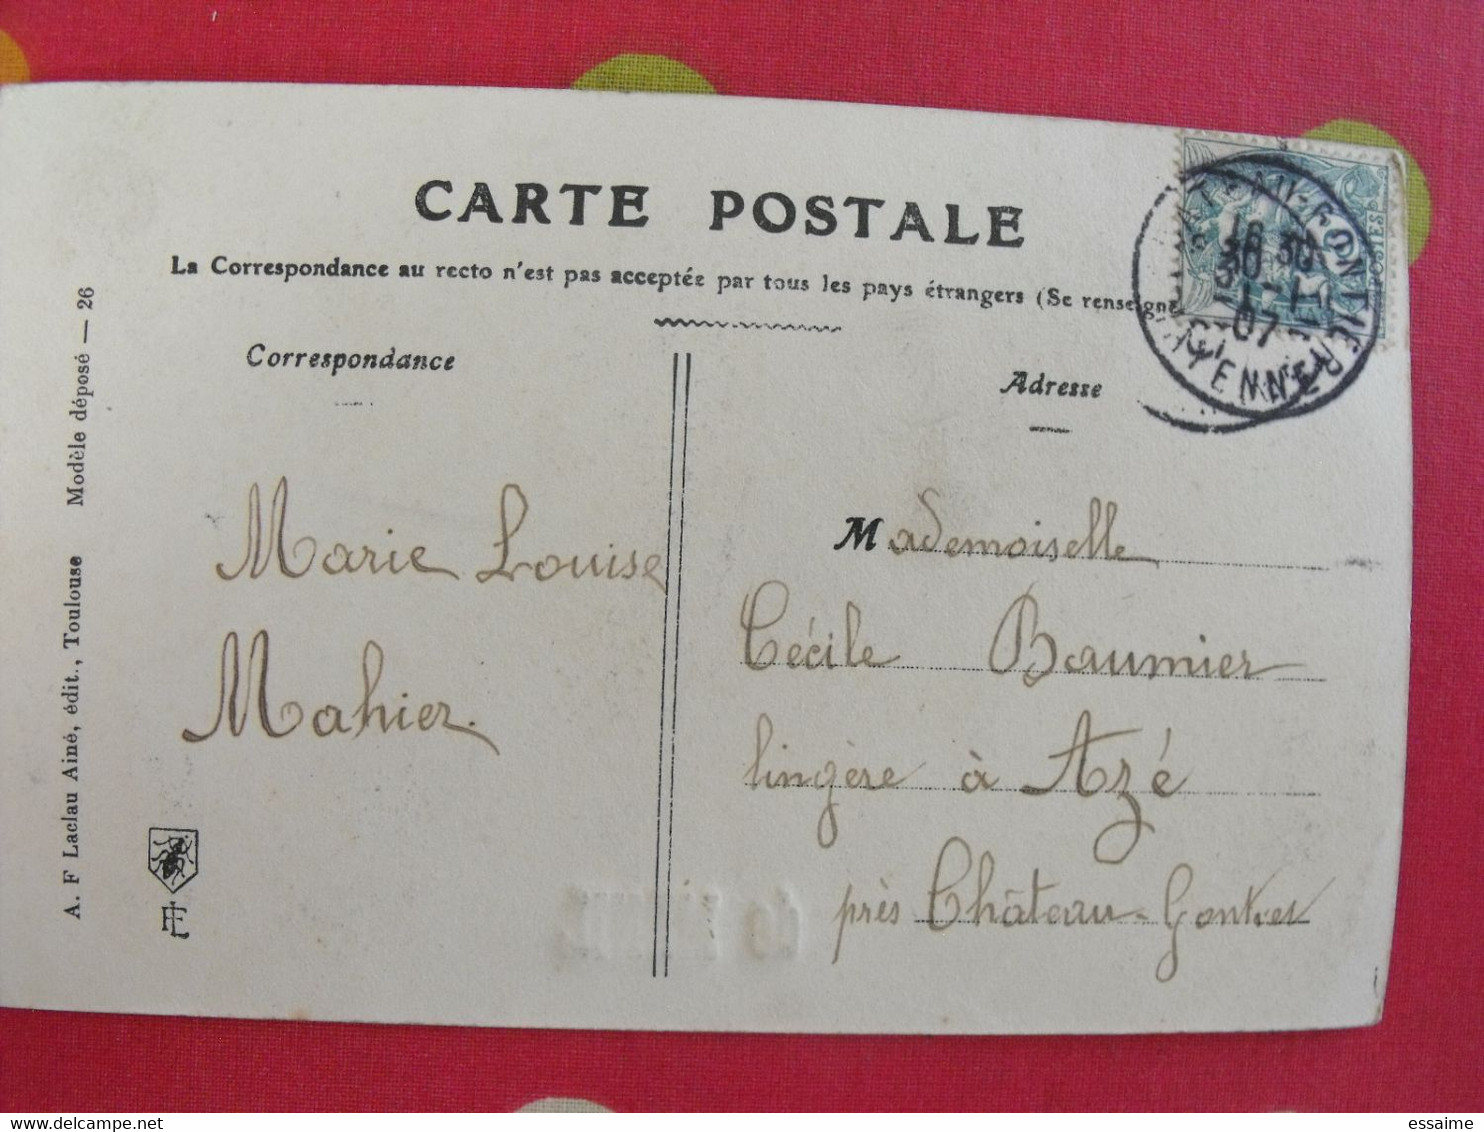 Carte Postale Heureuse Année De Menil. 1907 - Souvenir De...